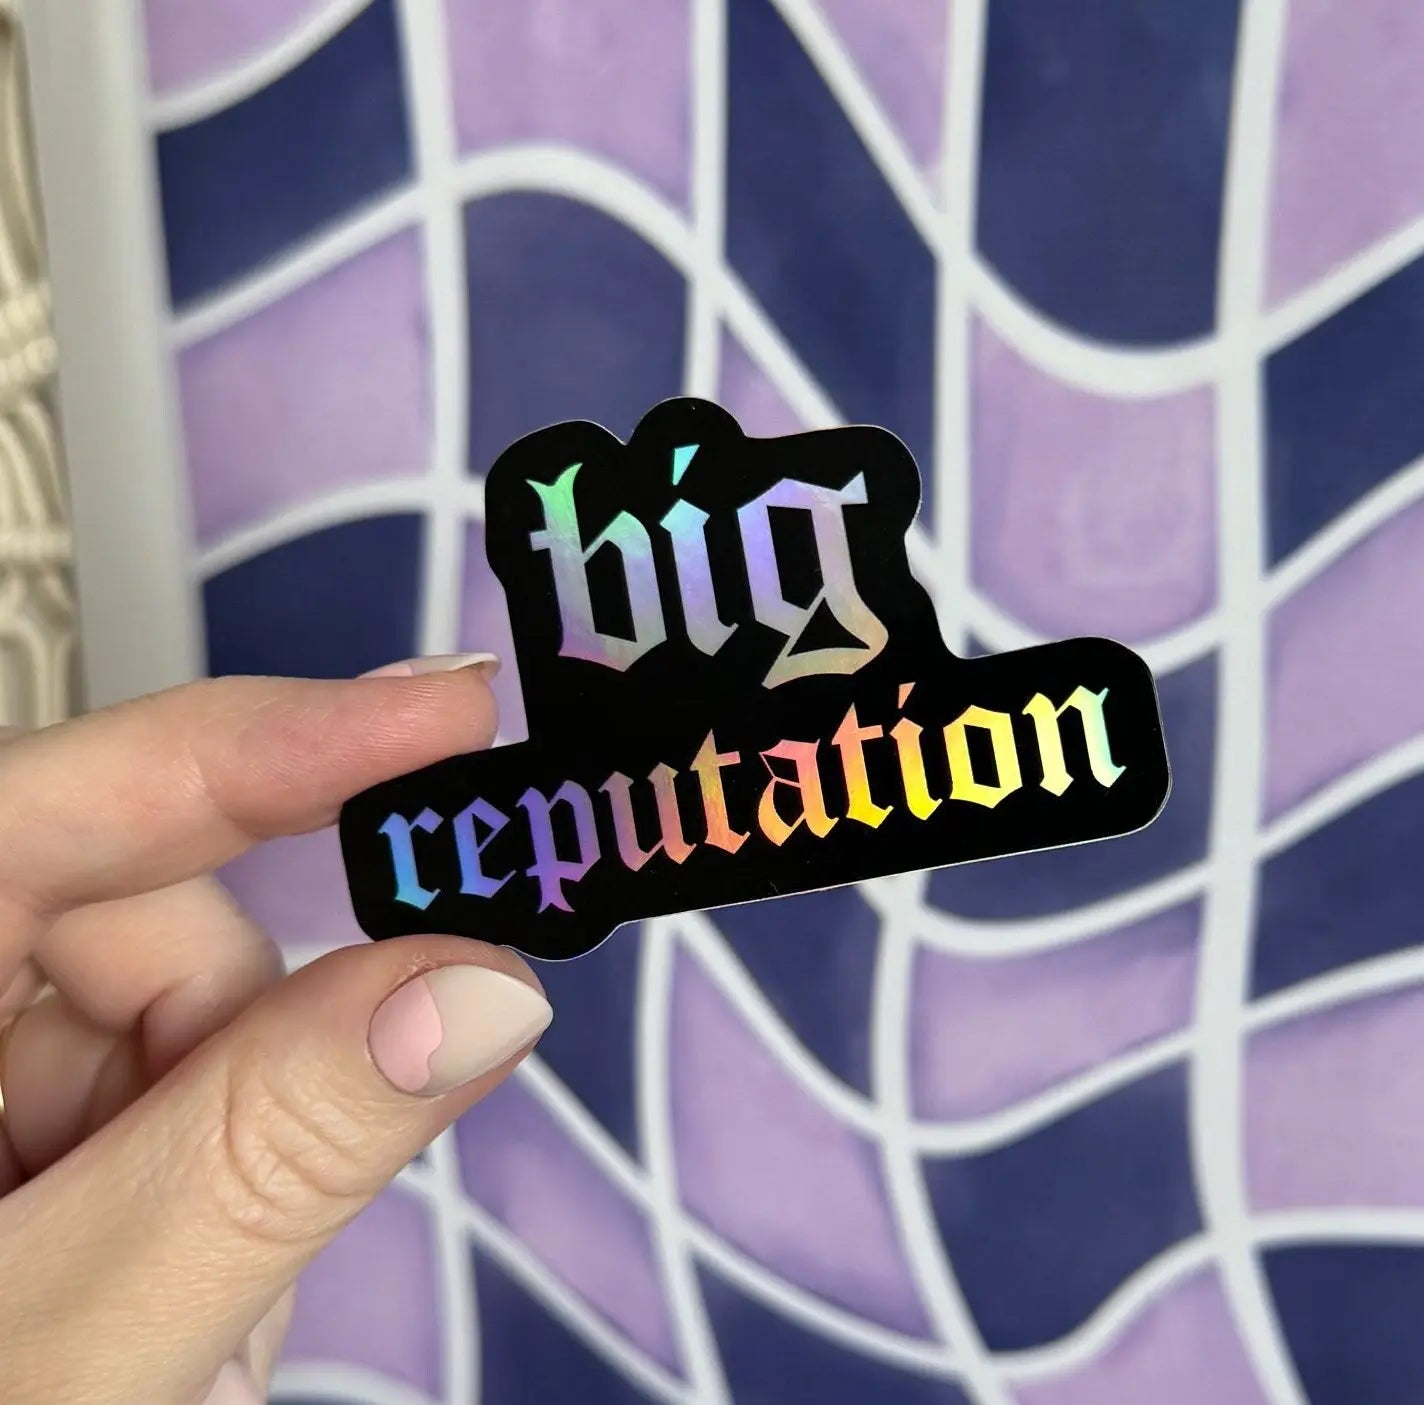 Big Reputation sticker MangoIllustrated